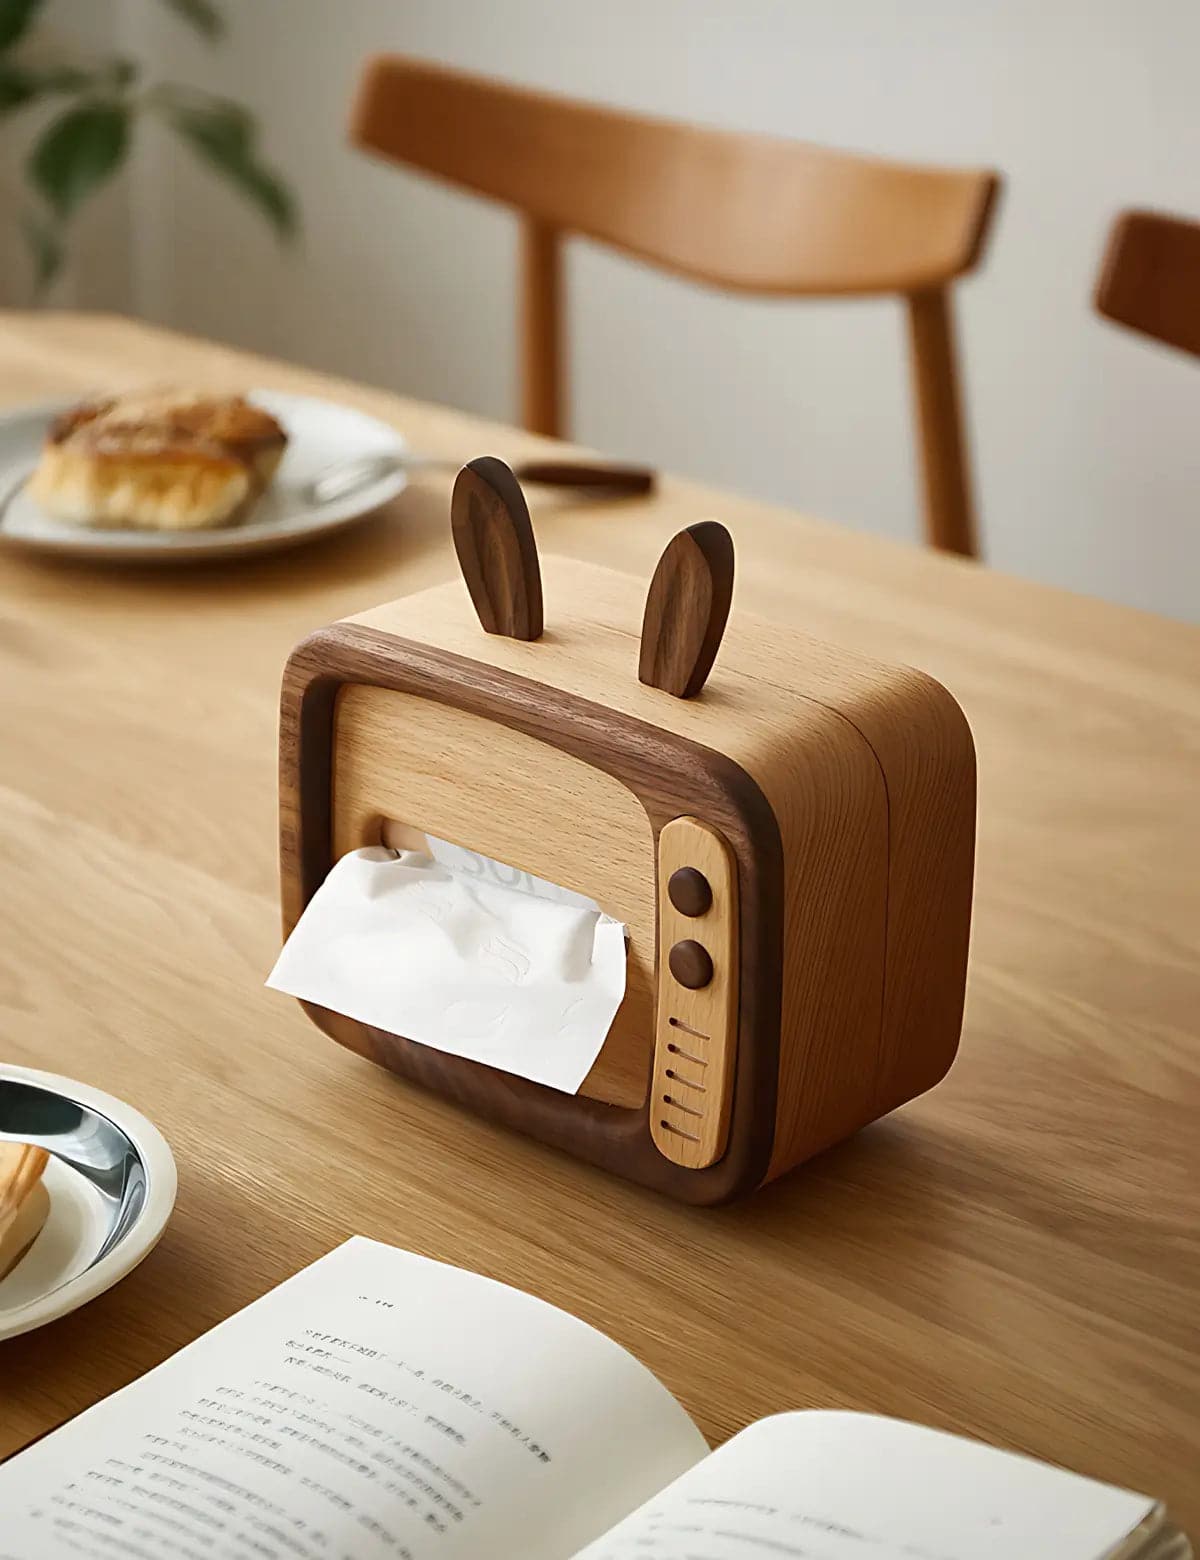 tv-rabbit-wooden-tissue-box-home-accessory-05